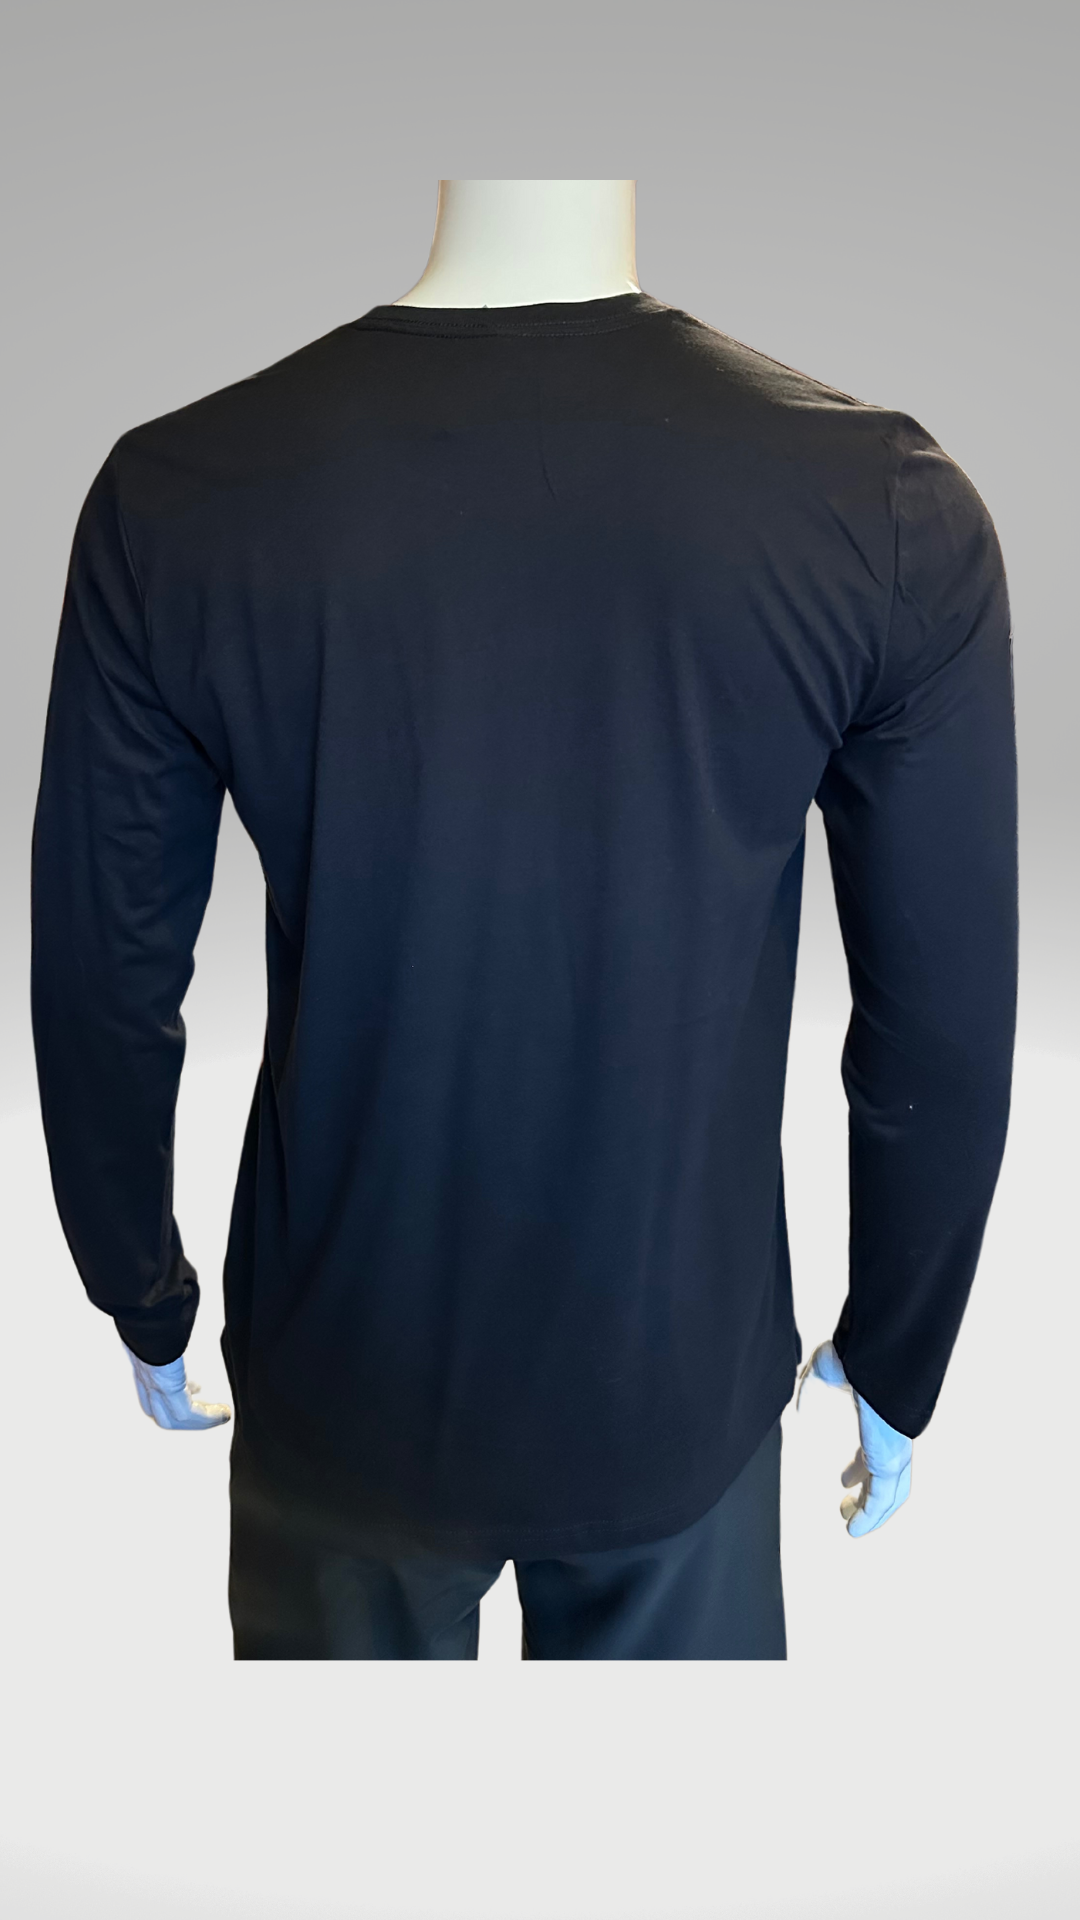 Long Sleeve T-Shirt - Black - Black/White Kaia on FL Seal (Front)